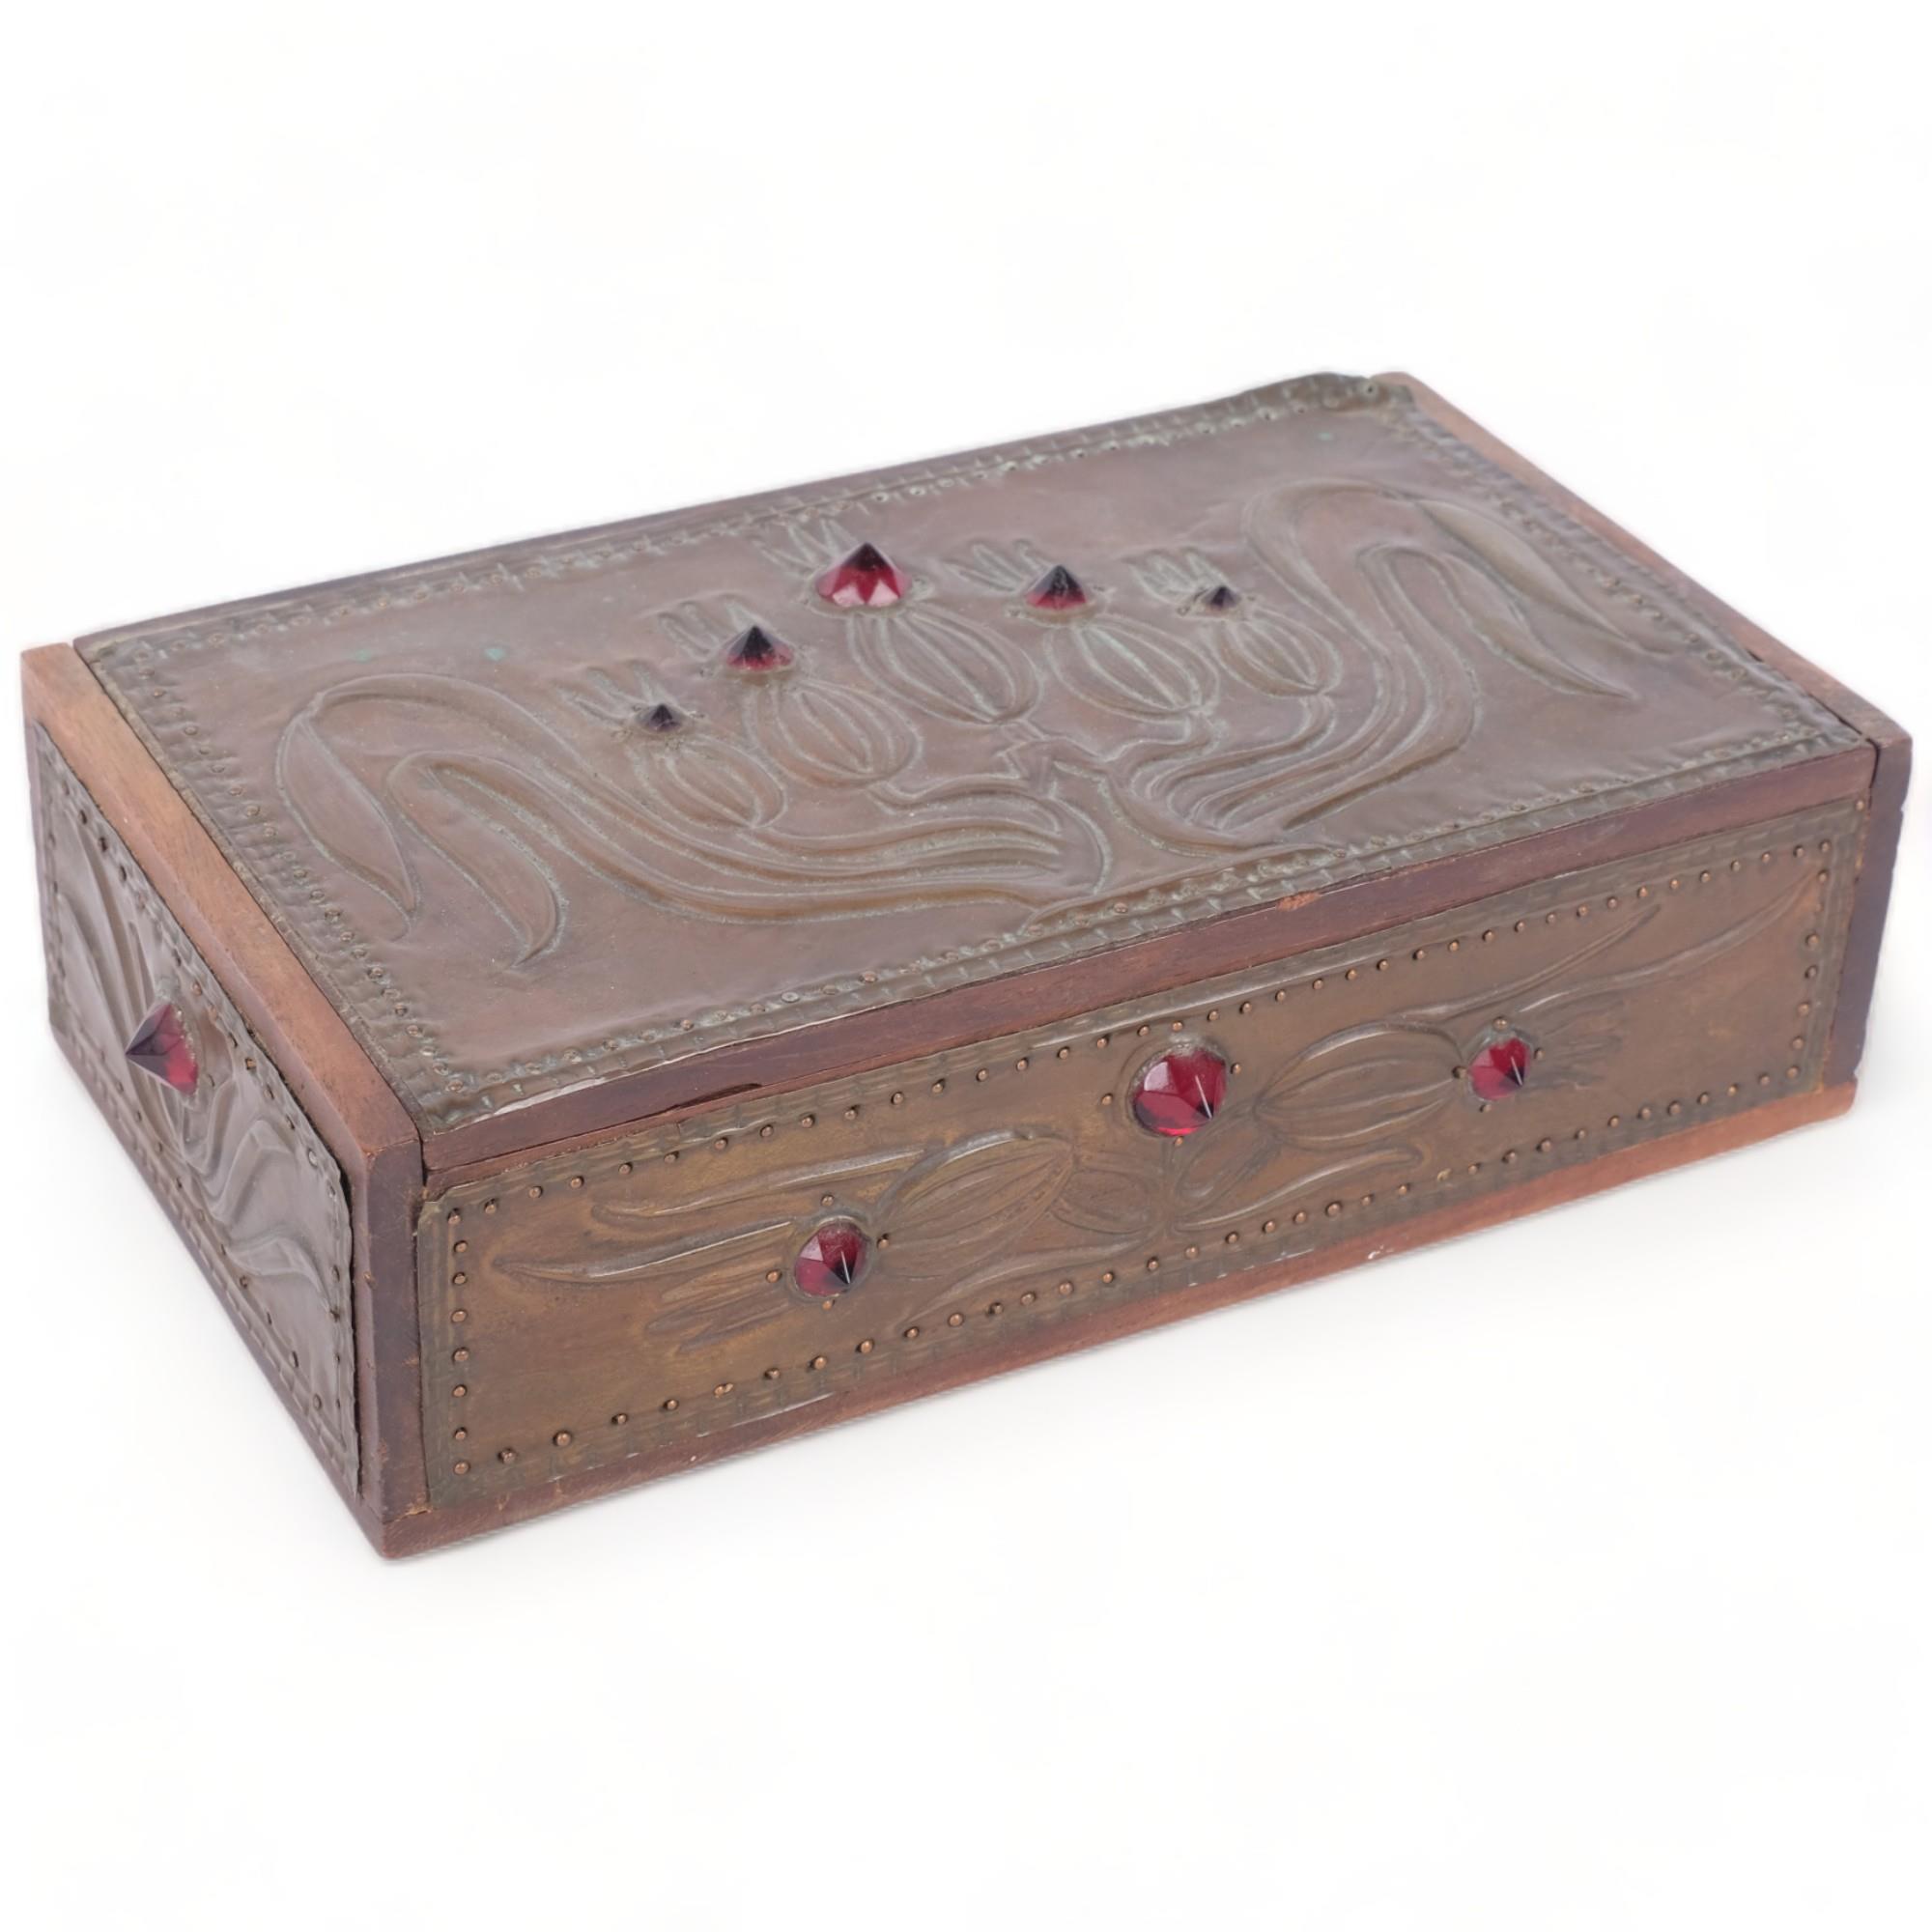 An Art Nouveau copper-clad box, with inset red stones (A/F), 21.5cm across